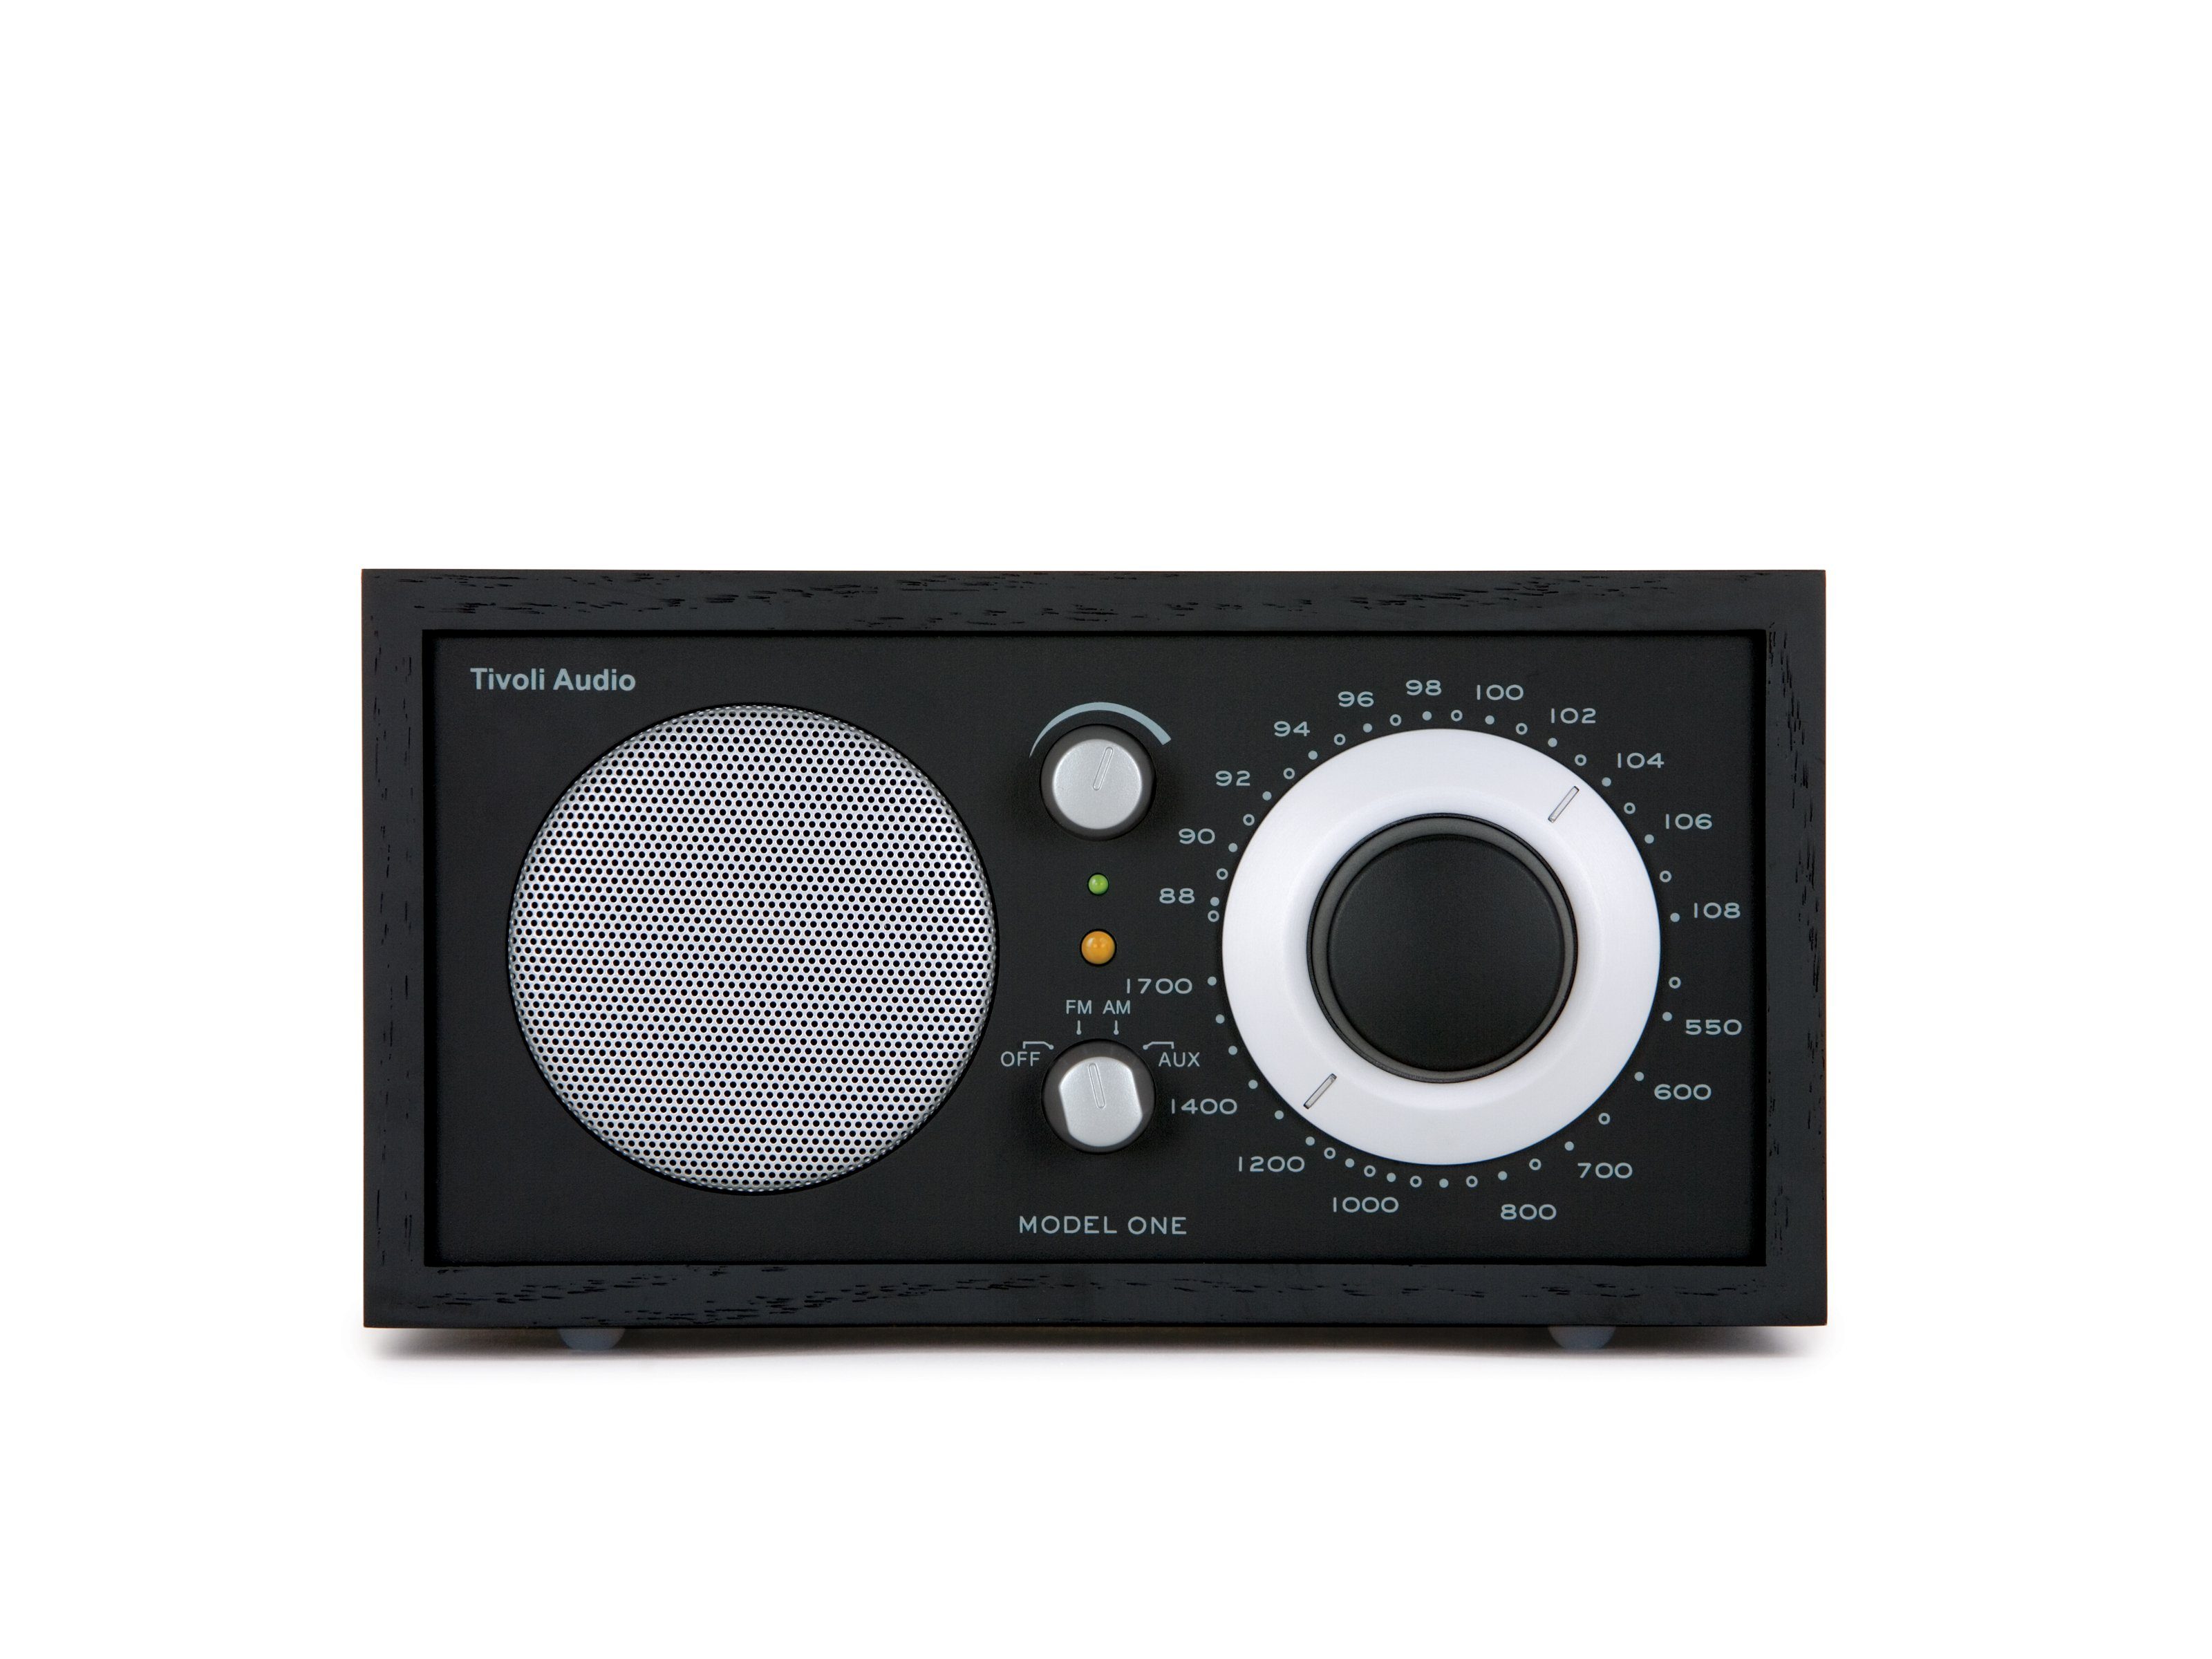 Tivoli Audio Model One Küchen-Radio (FM-Tuner, Küchen-Radio, Retro-Optik, Echtholz-Gehäuse)